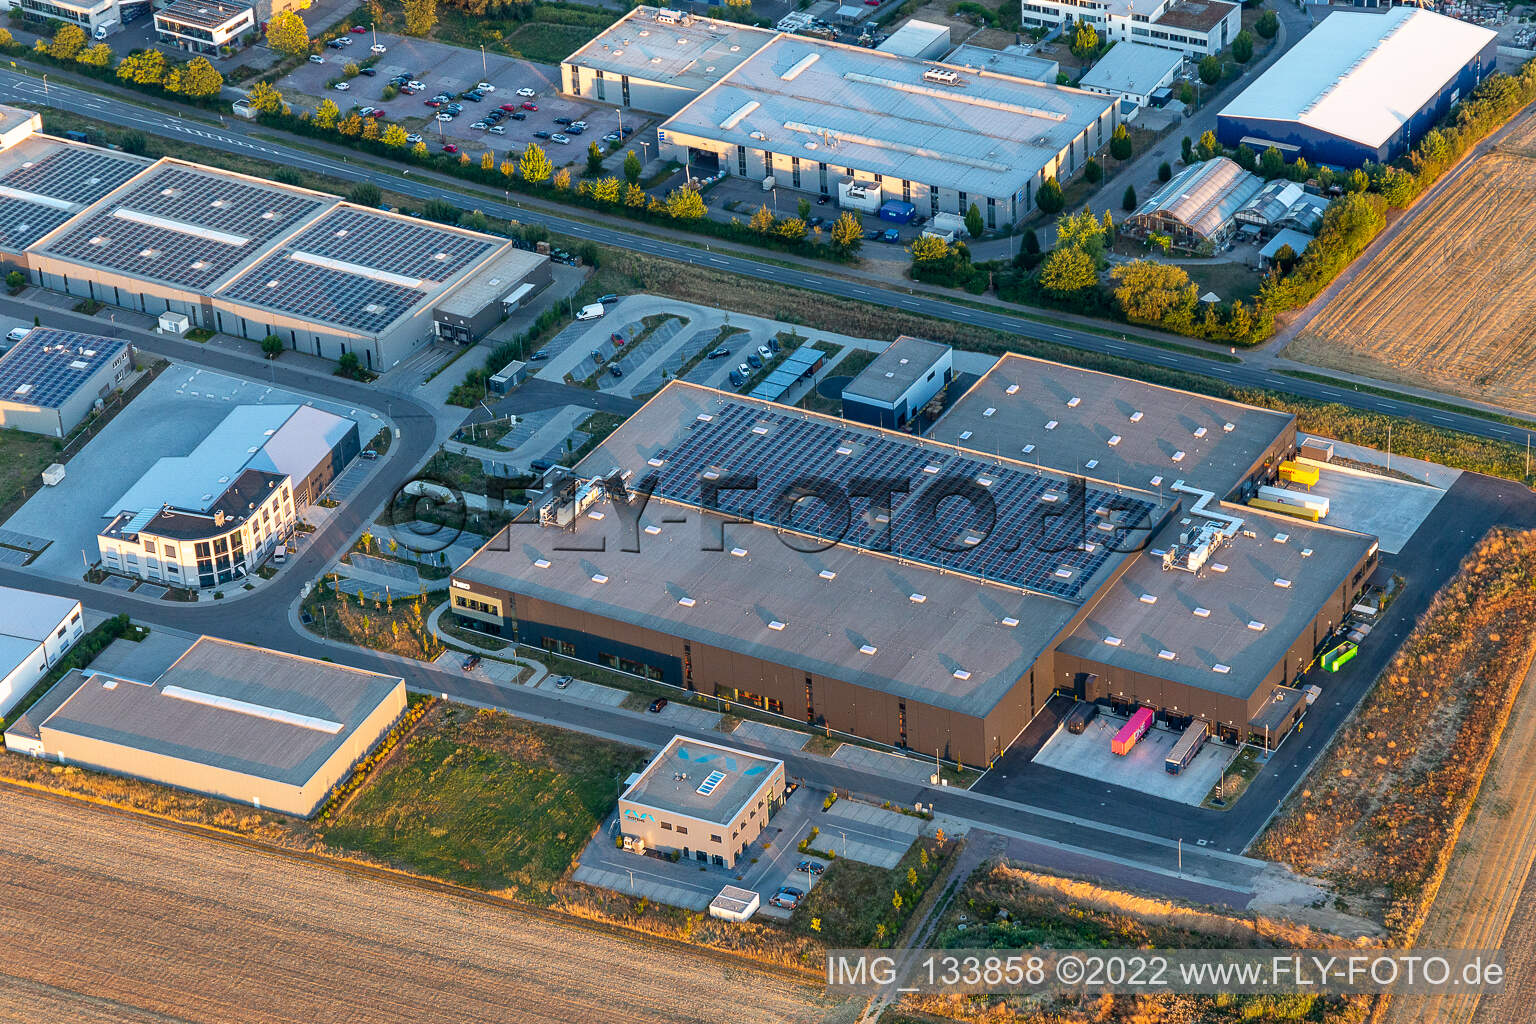 Aerial photograpy of Heo GmbH in the district Herxheim in Herxheim bei Landau/Pfalz in the state Rhineland-Palatinate, Germany